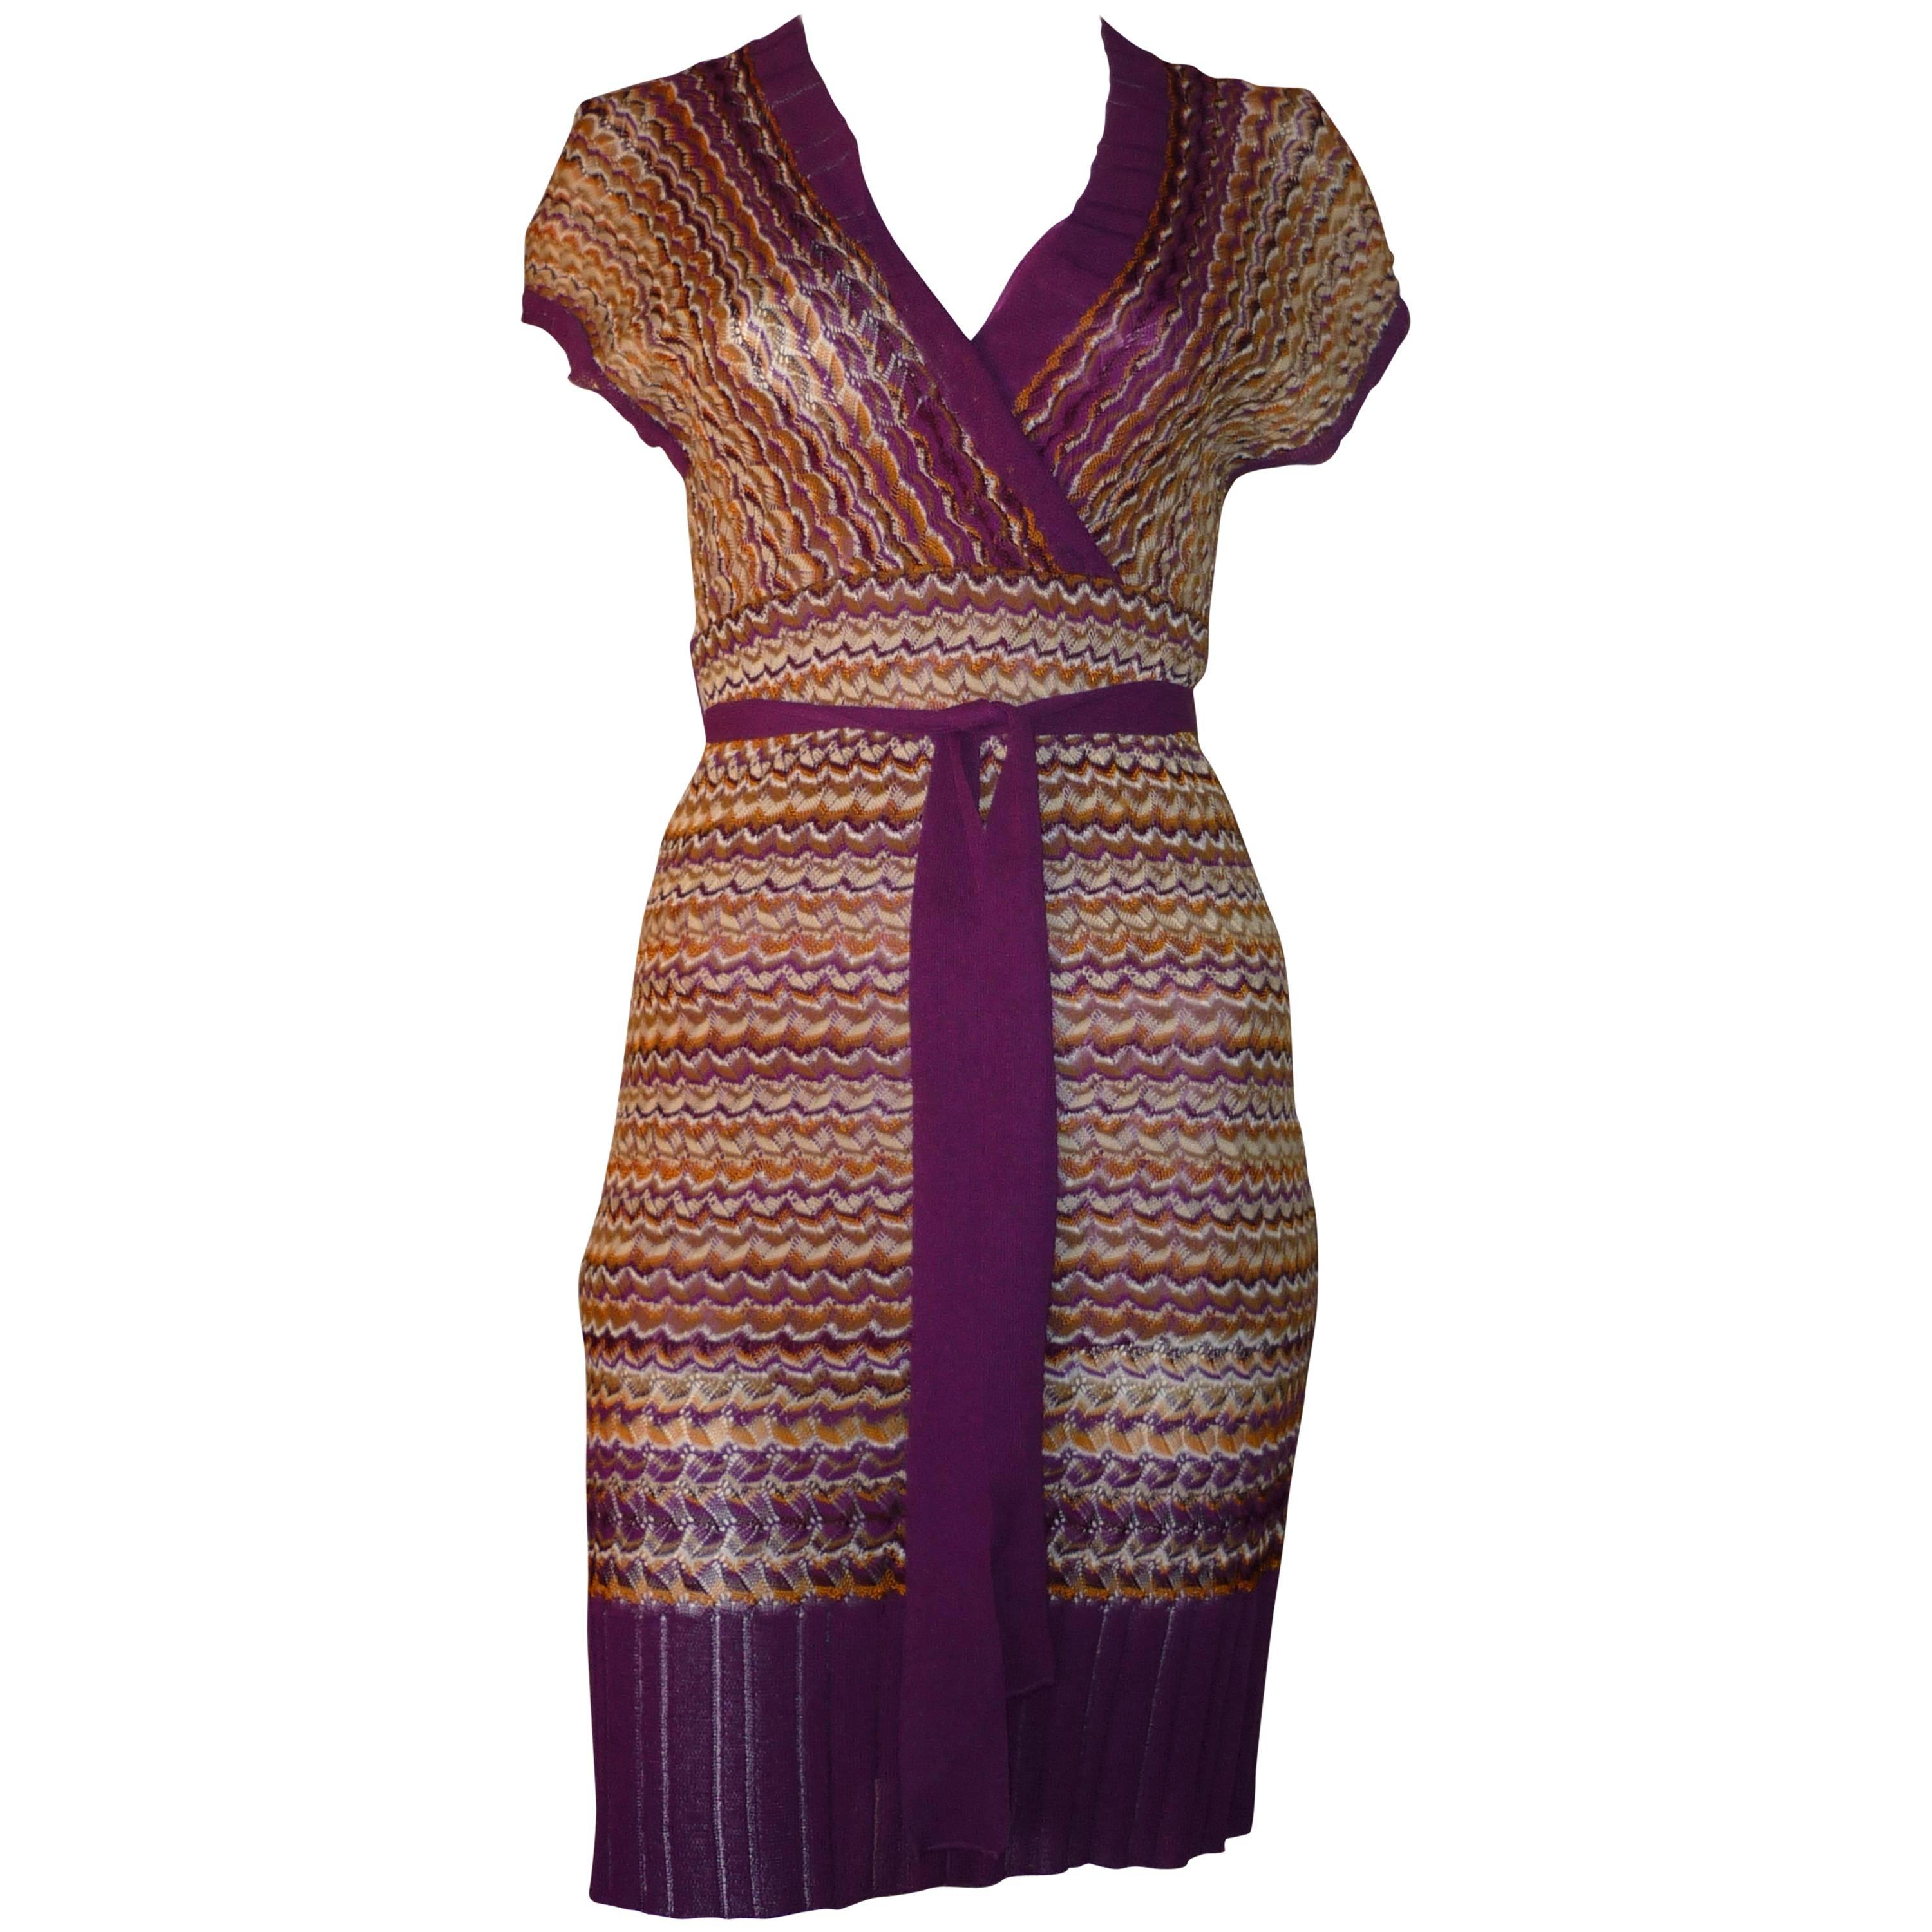 M. Missoni multi colored Knit Dress 